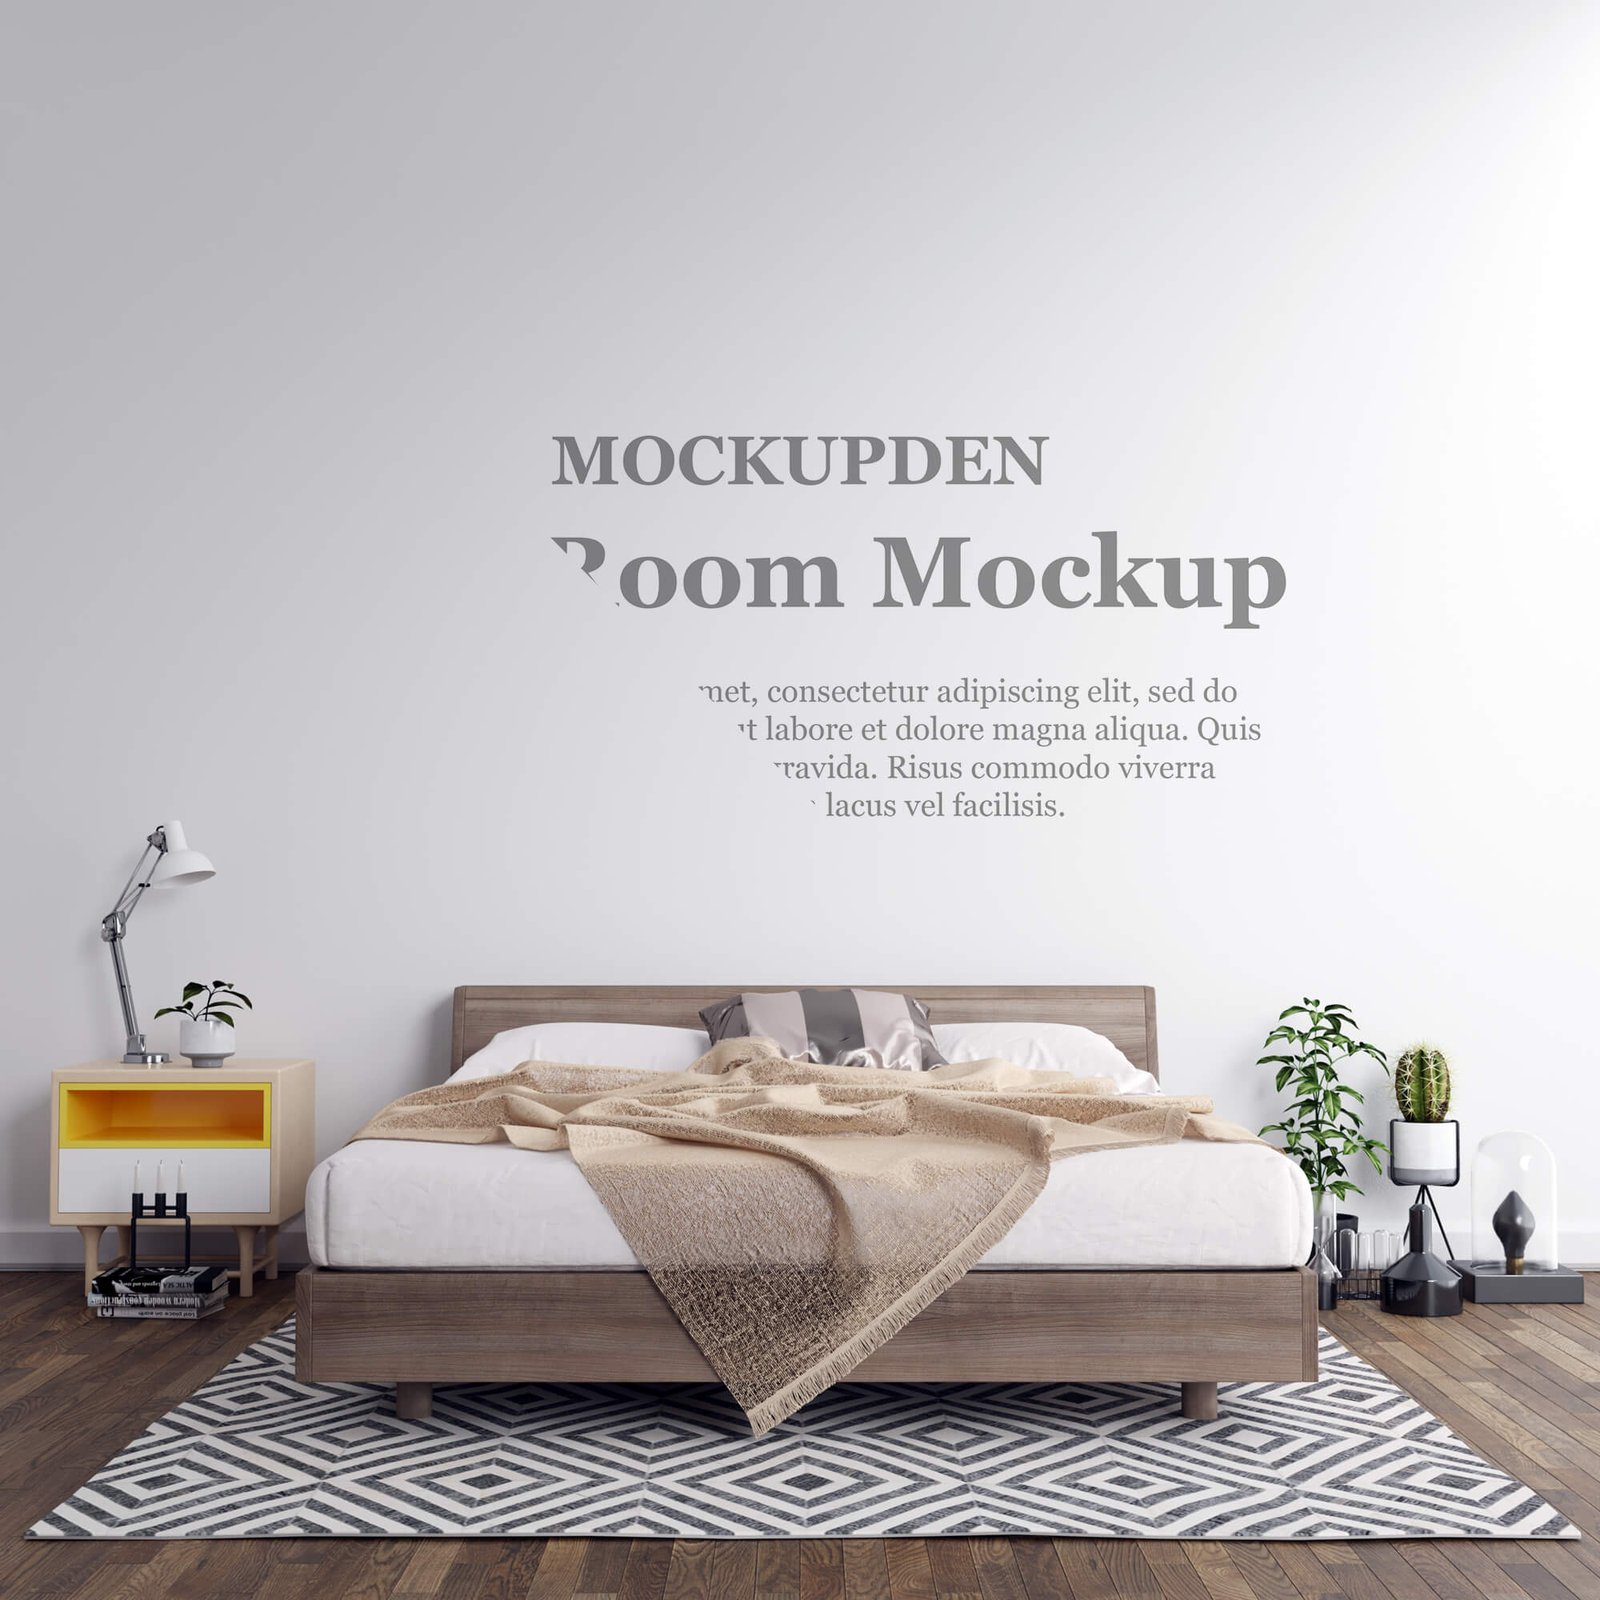 Editable Free Bed Room Mockup PSD Template